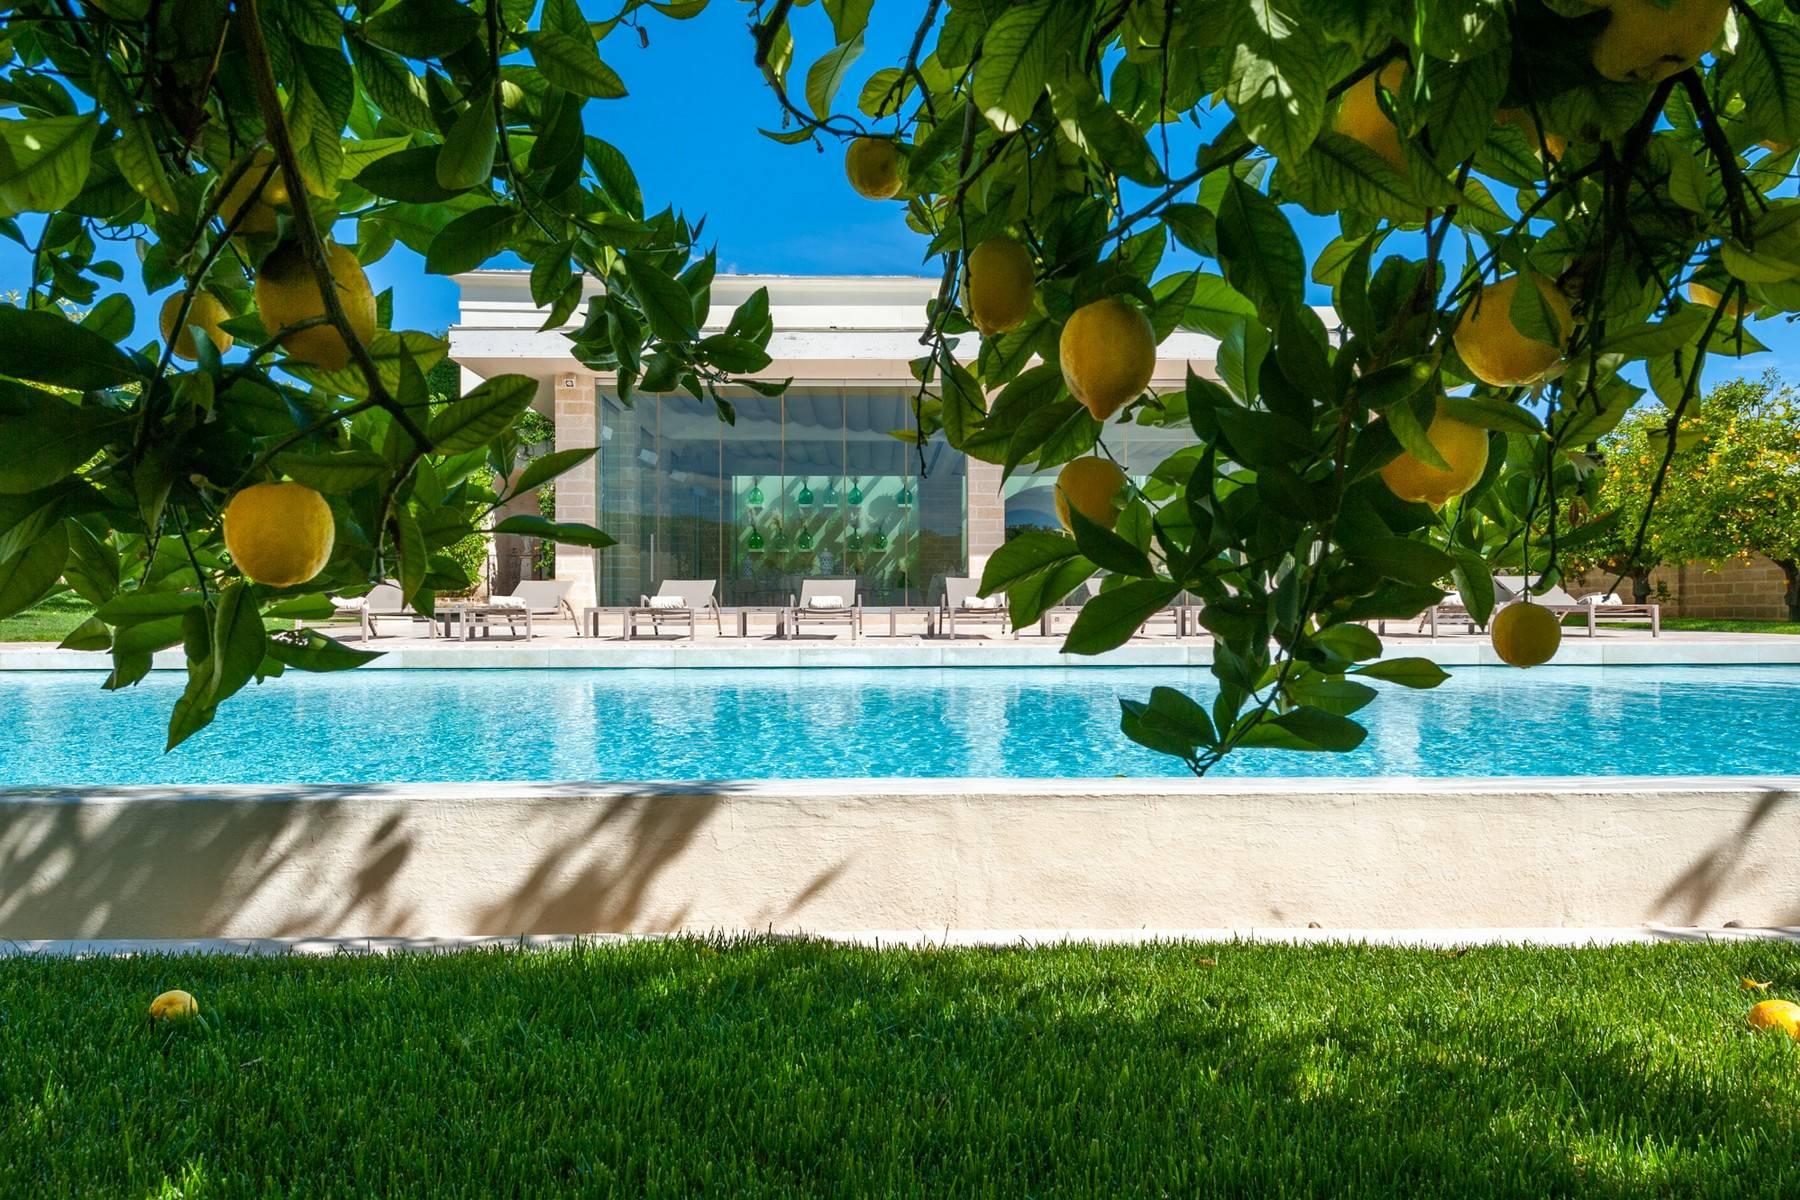 Splendid 17th century noble villa surrounded by citrus groves - 2